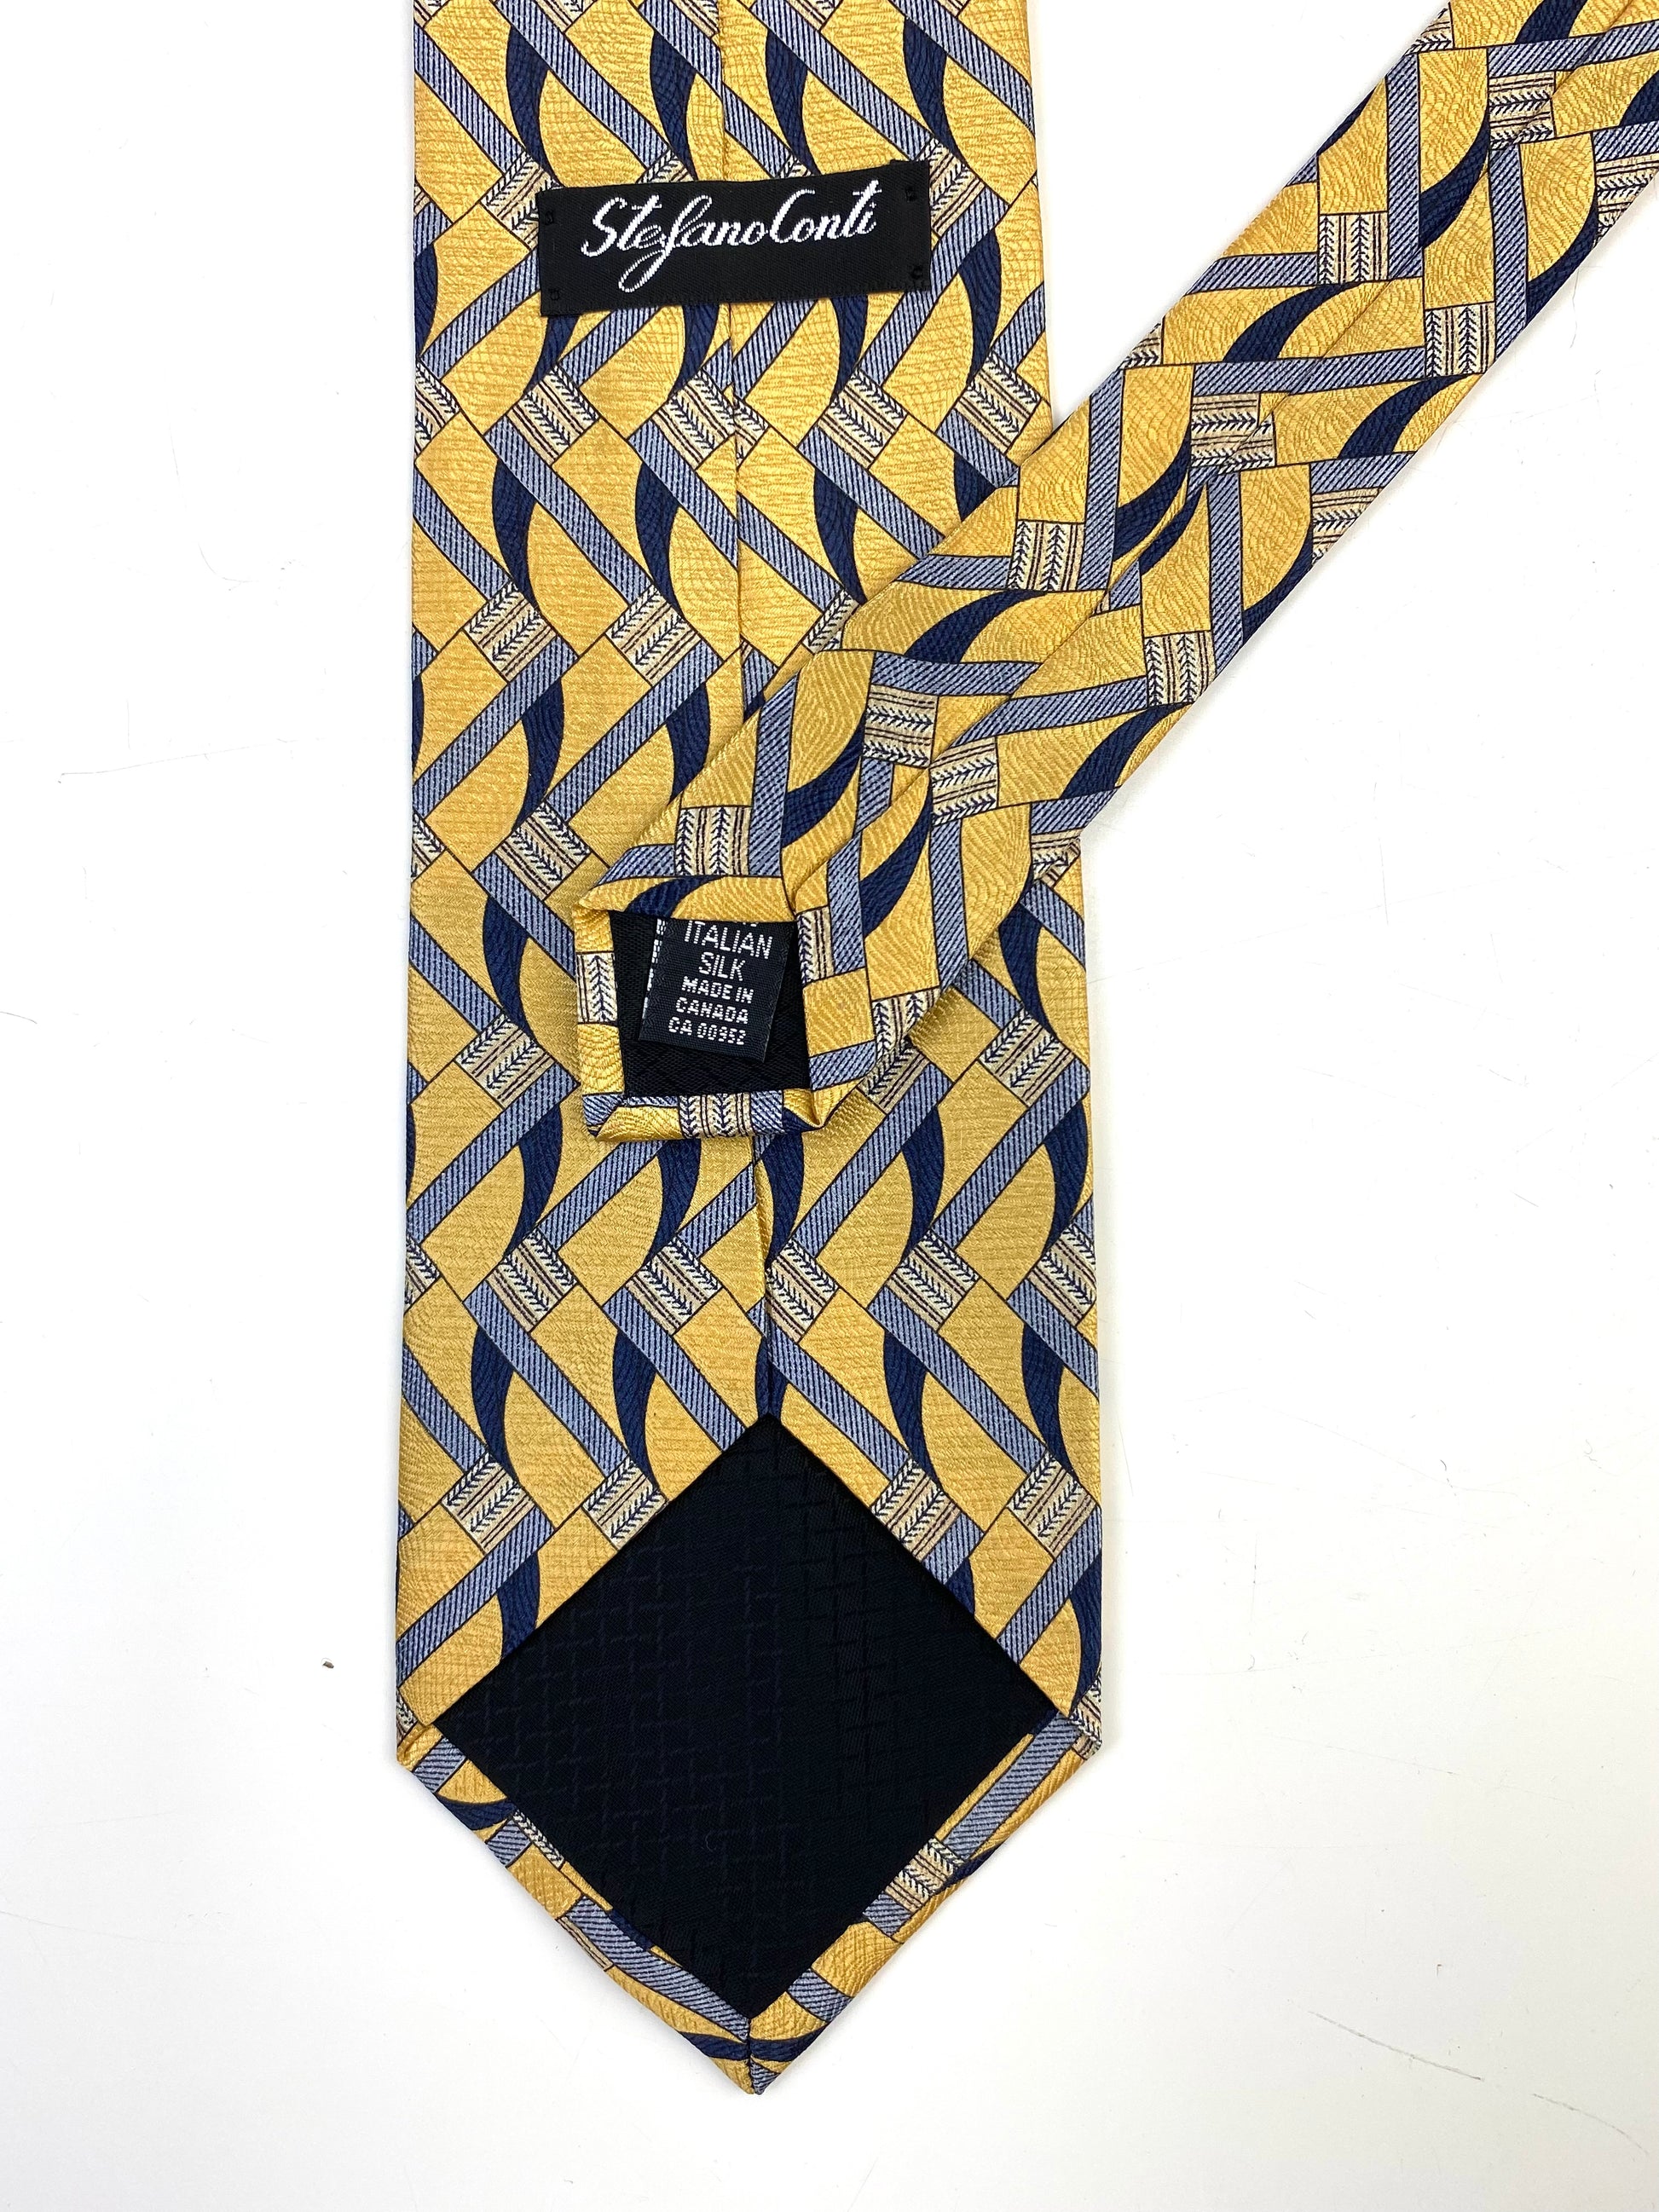 90s Deadstock Silk Necktie, Men's Vintage Gold/Grey Vertical ZigZag Chevron Pattern Tie, NOS